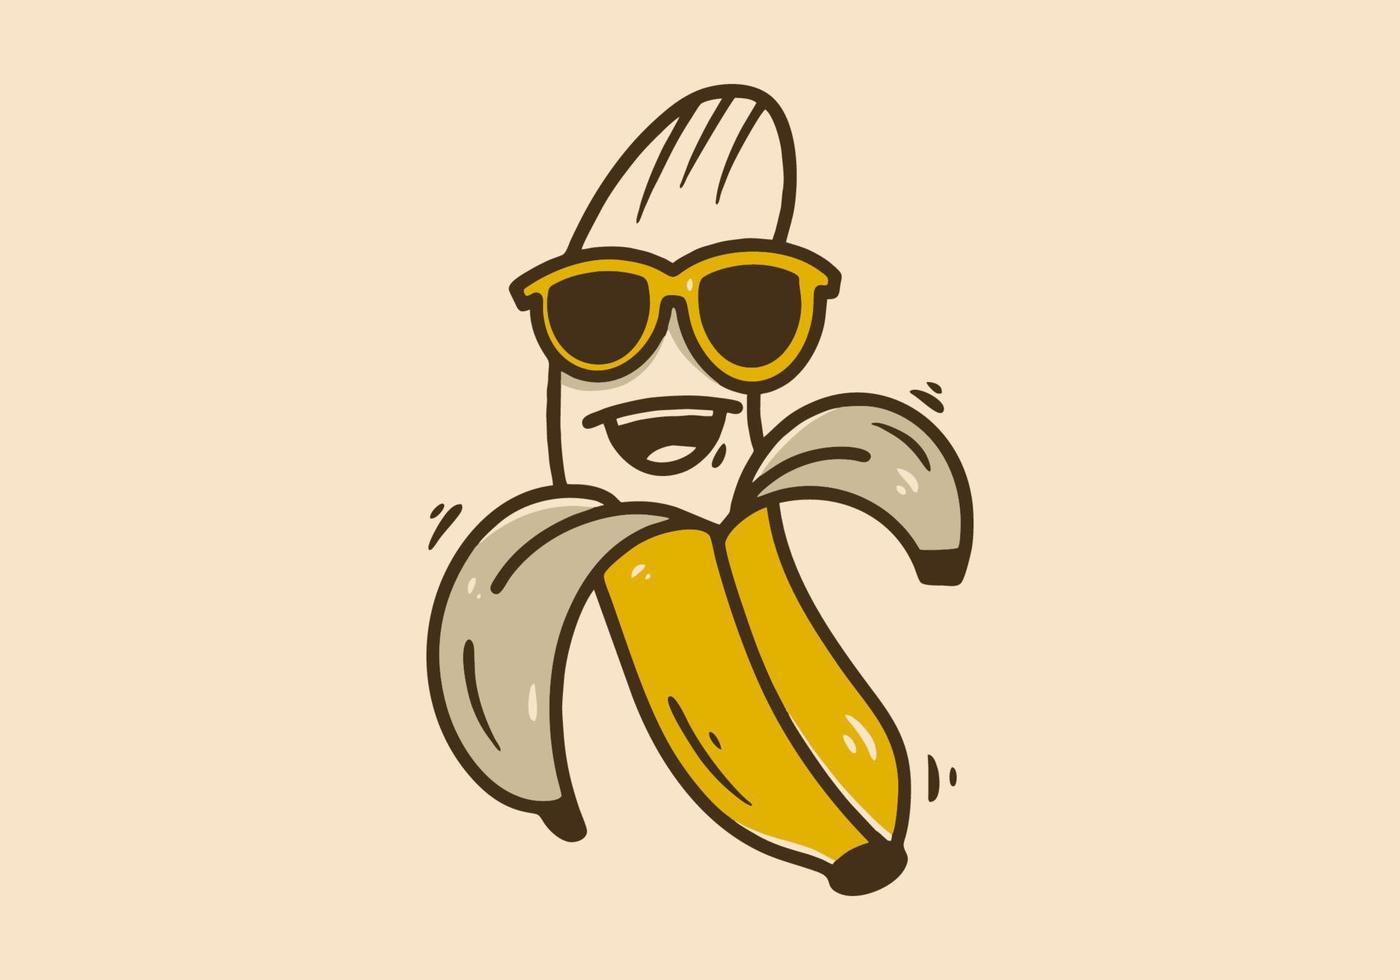 Illustration character design of a banana wearing glasses vector